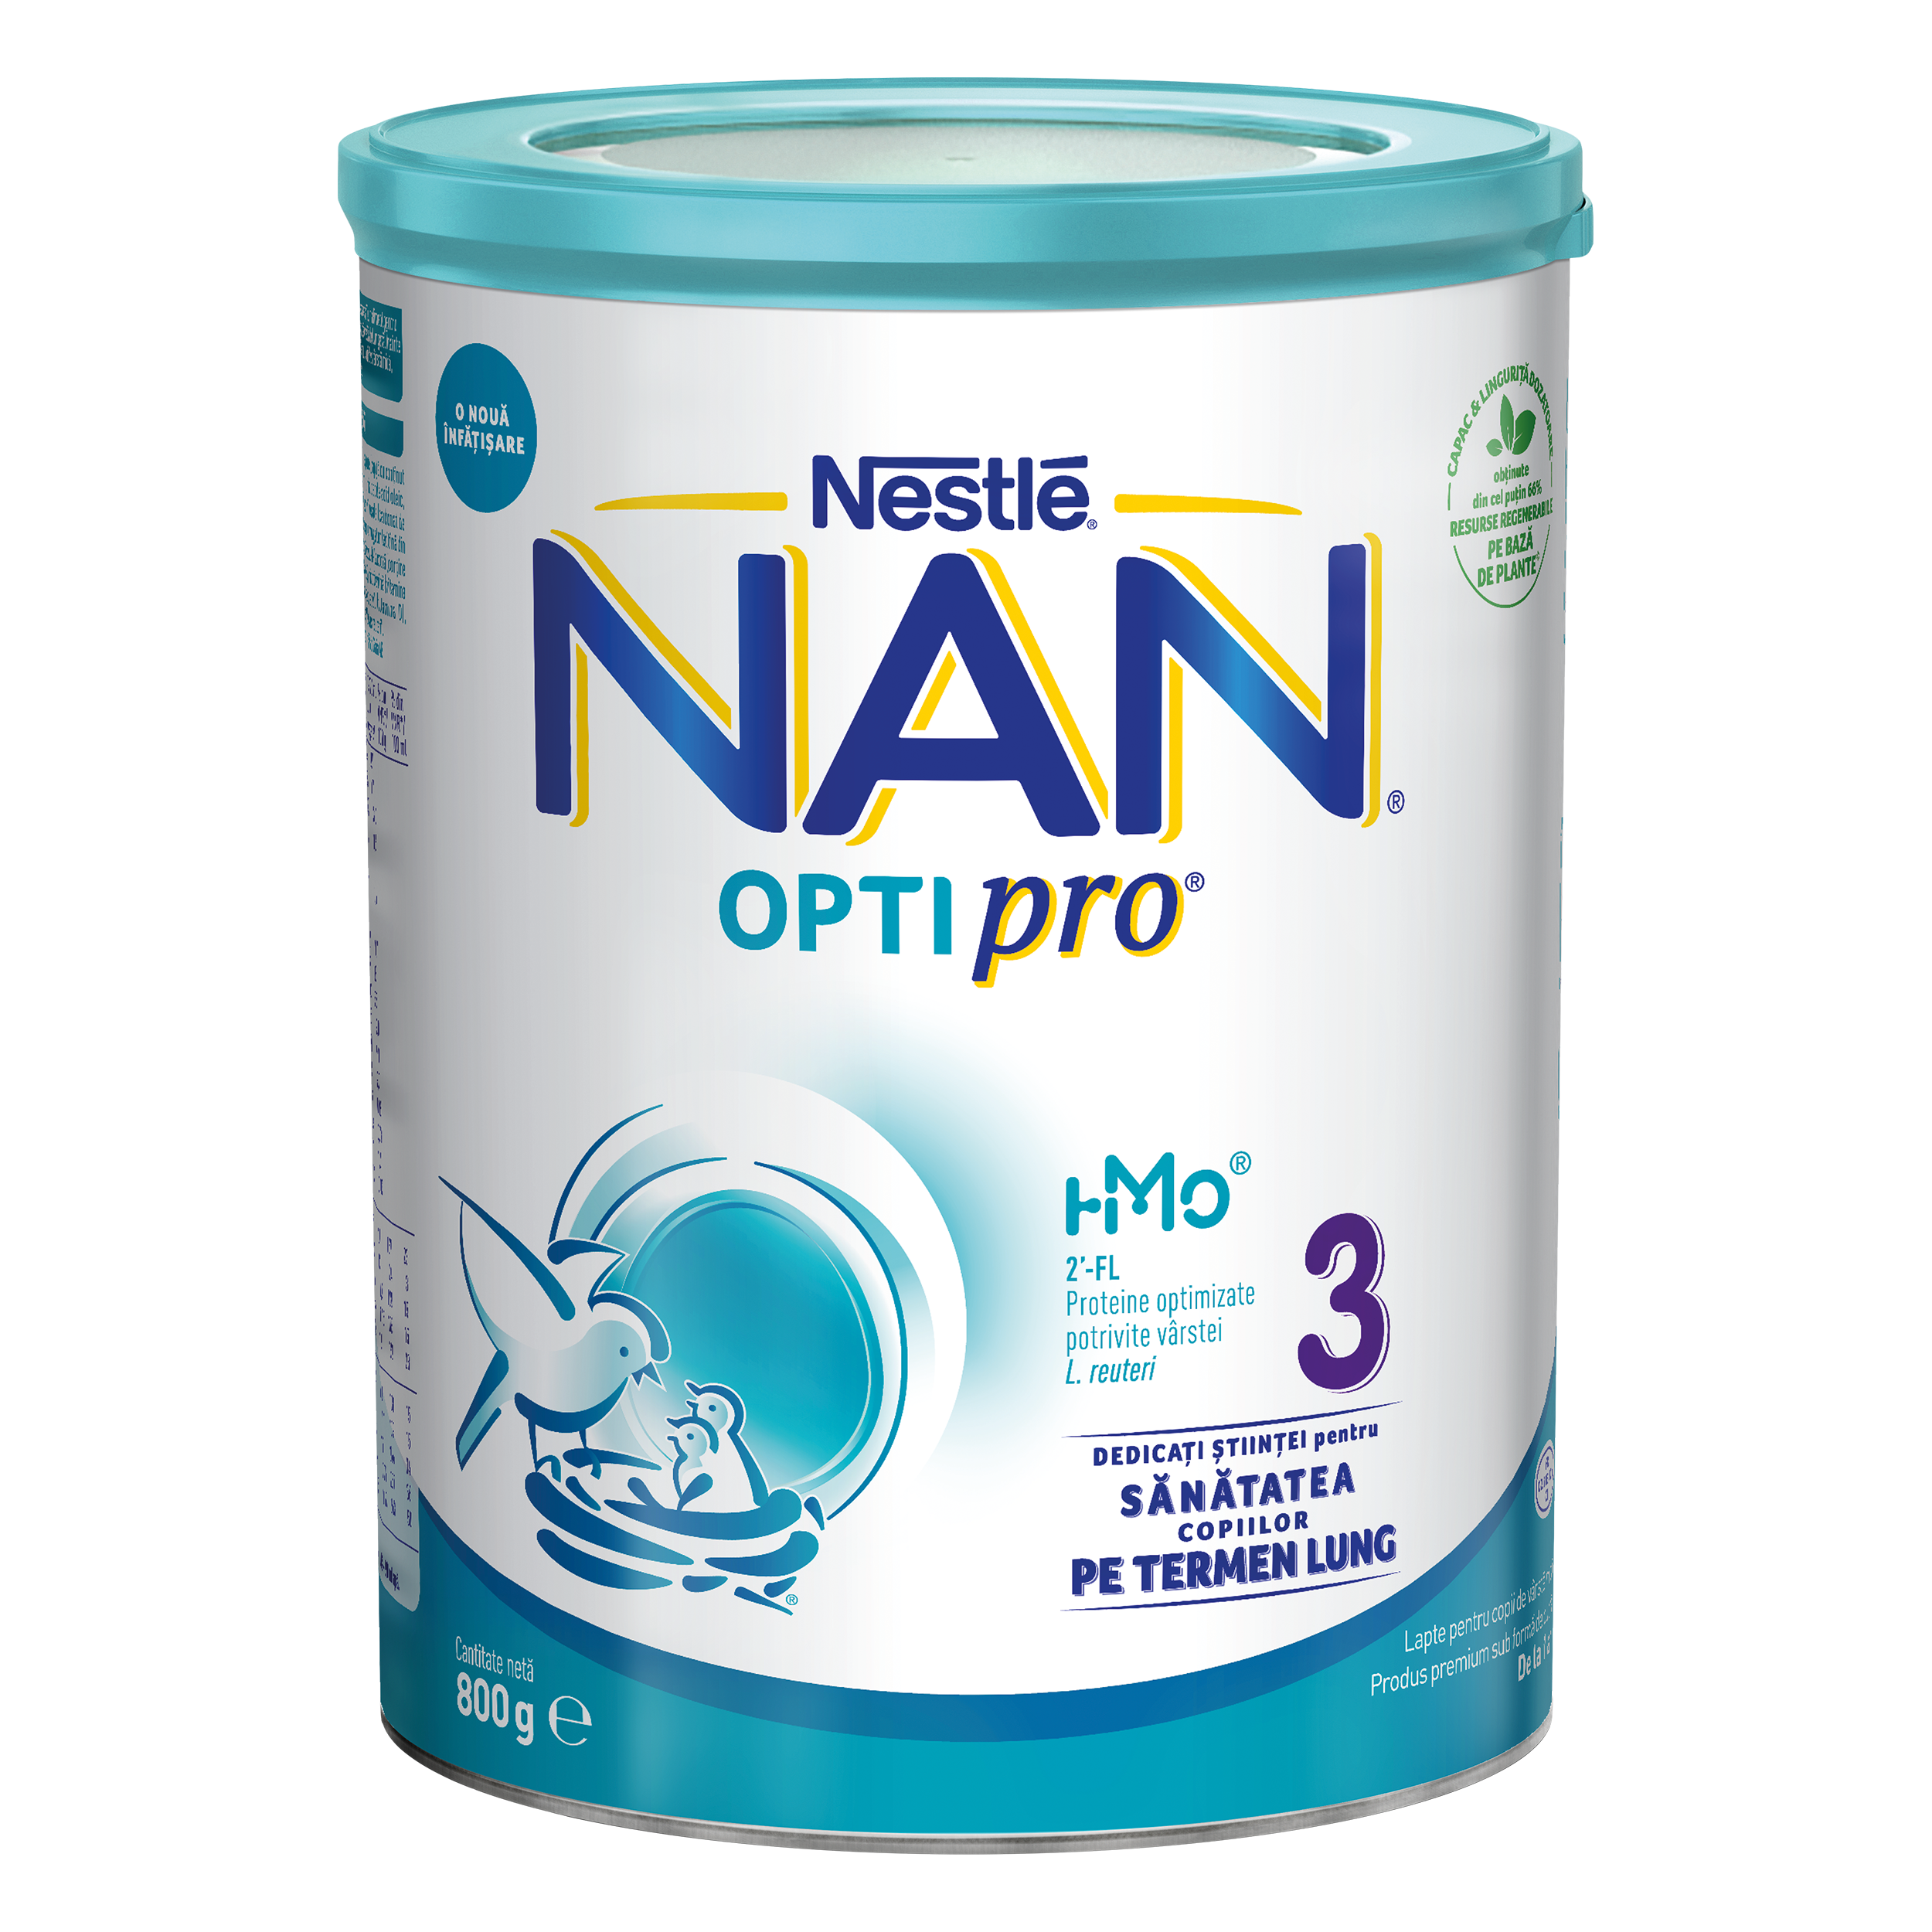 Lapte - Nestle Nan 3 Optipro hmo 800g, de la 1 an, sinapis.ro